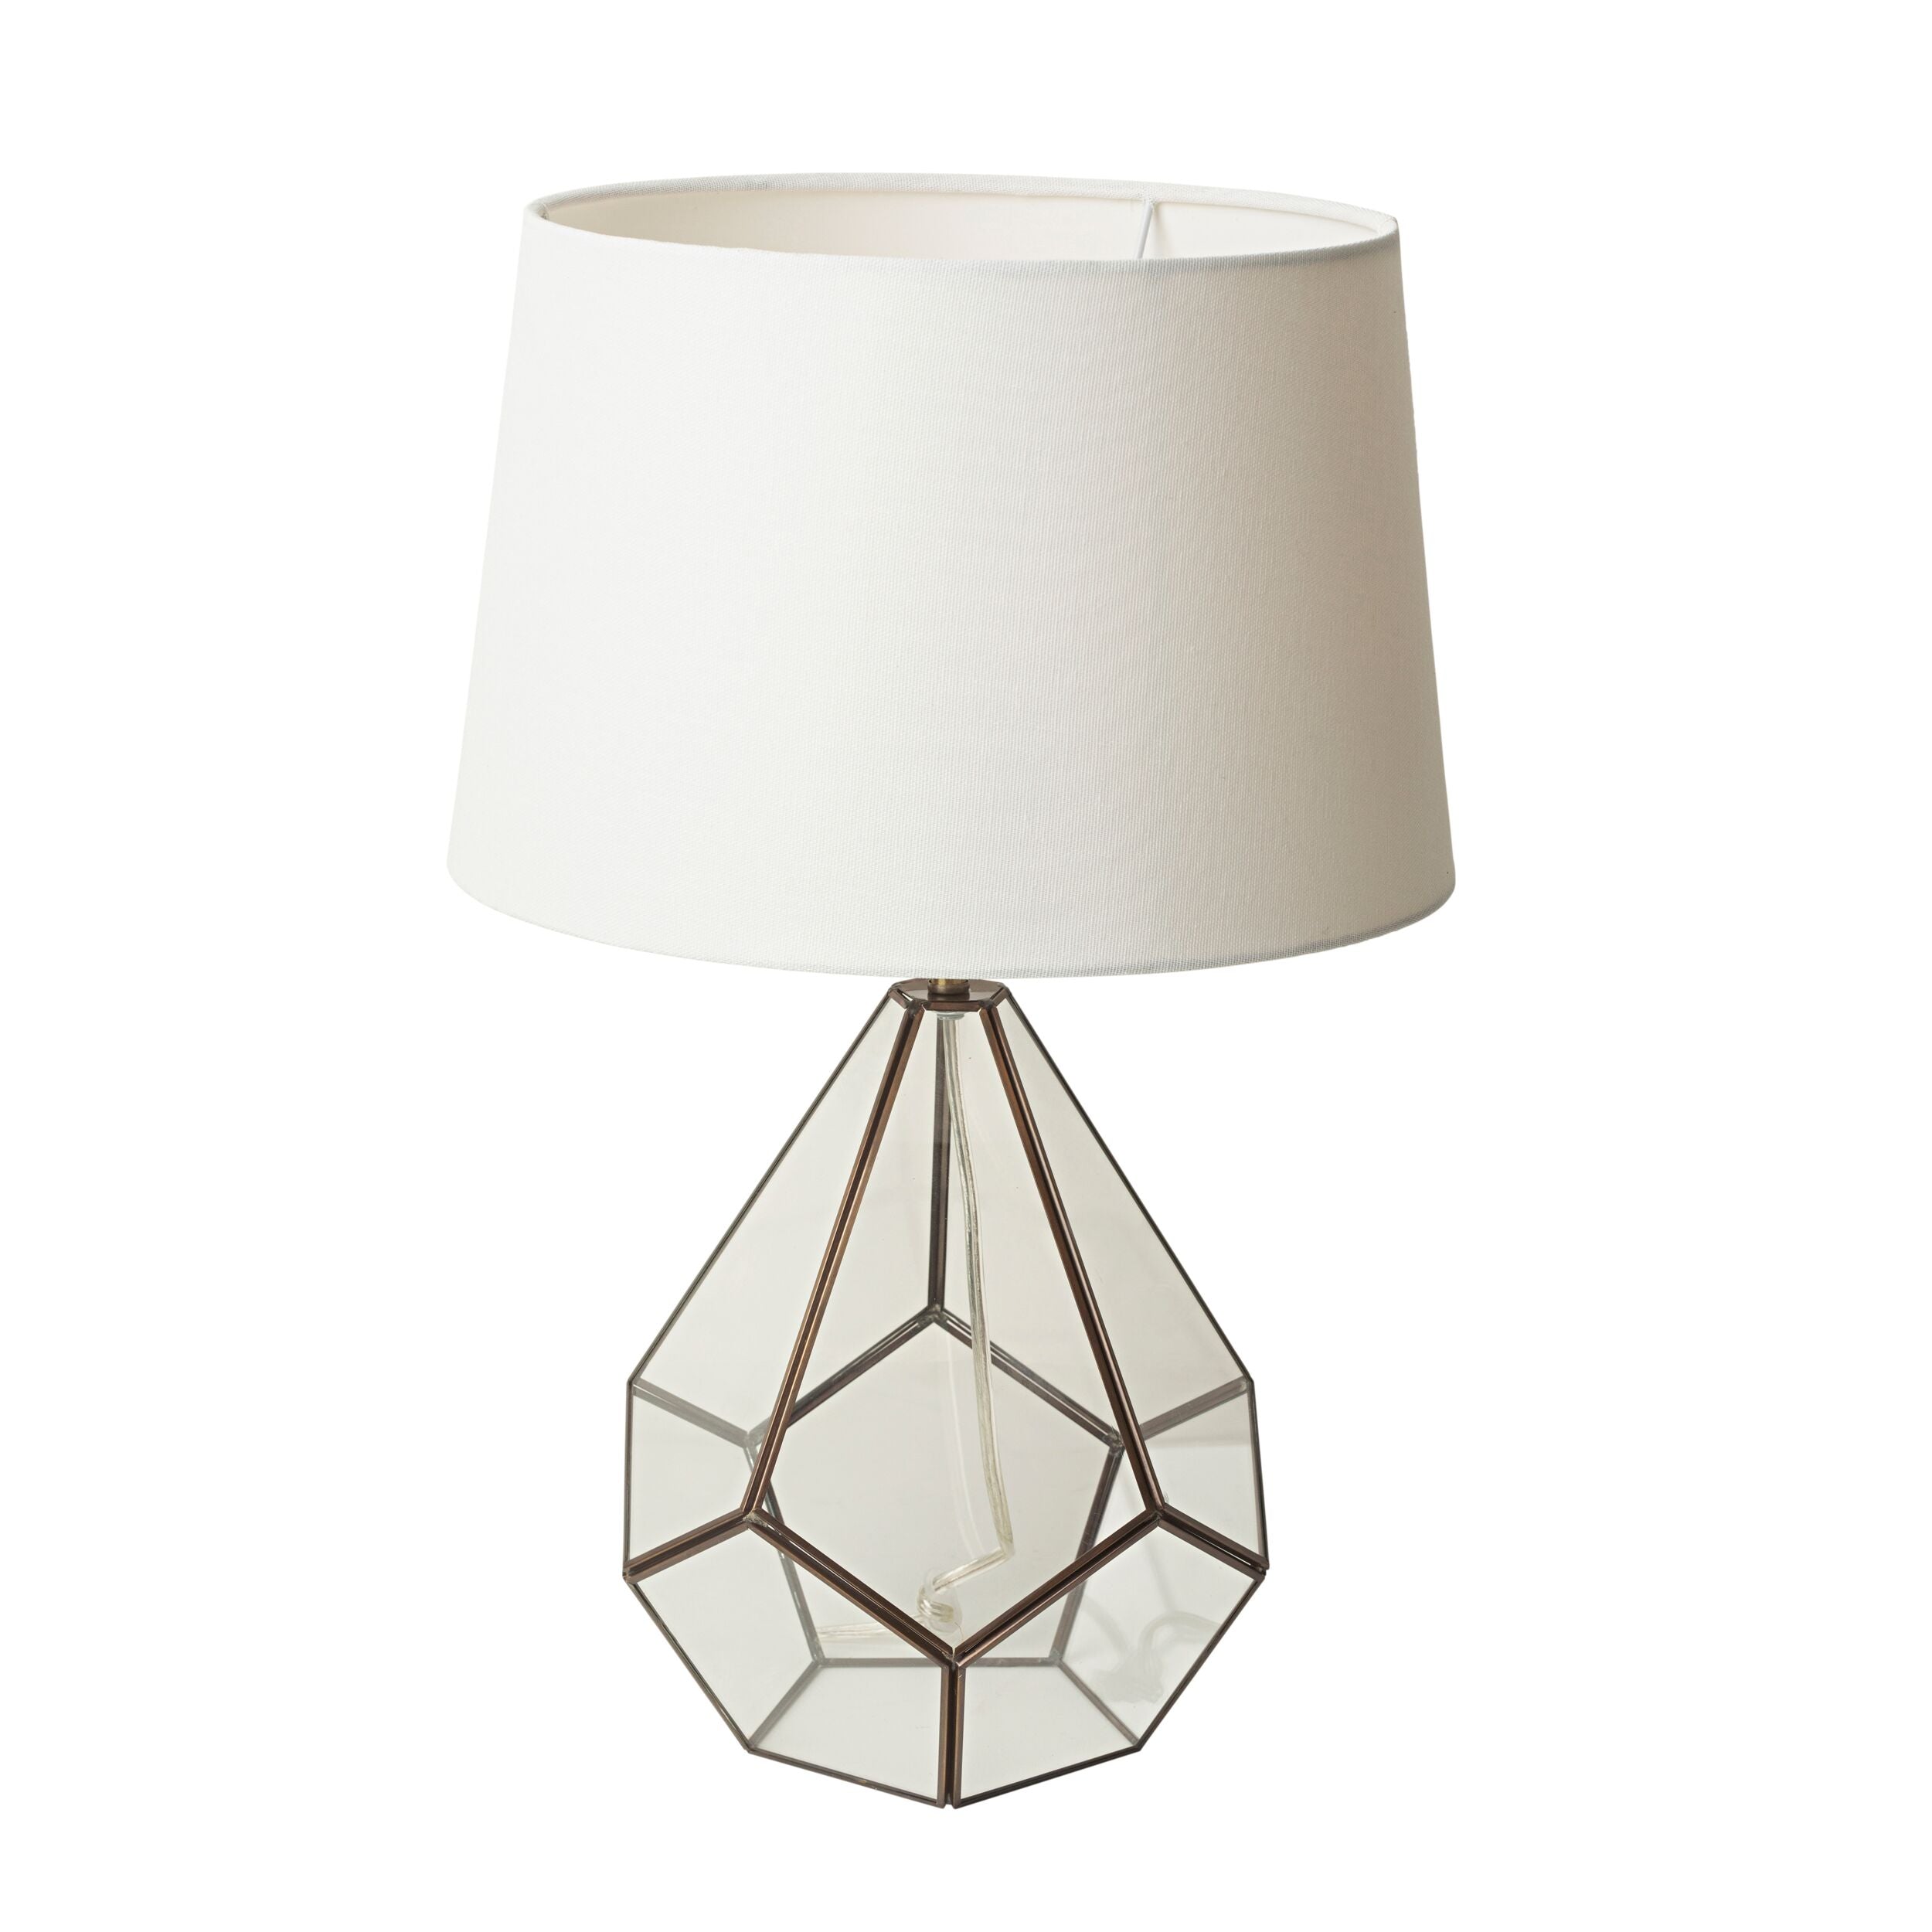 Hexagonal Table Lamp 54cm